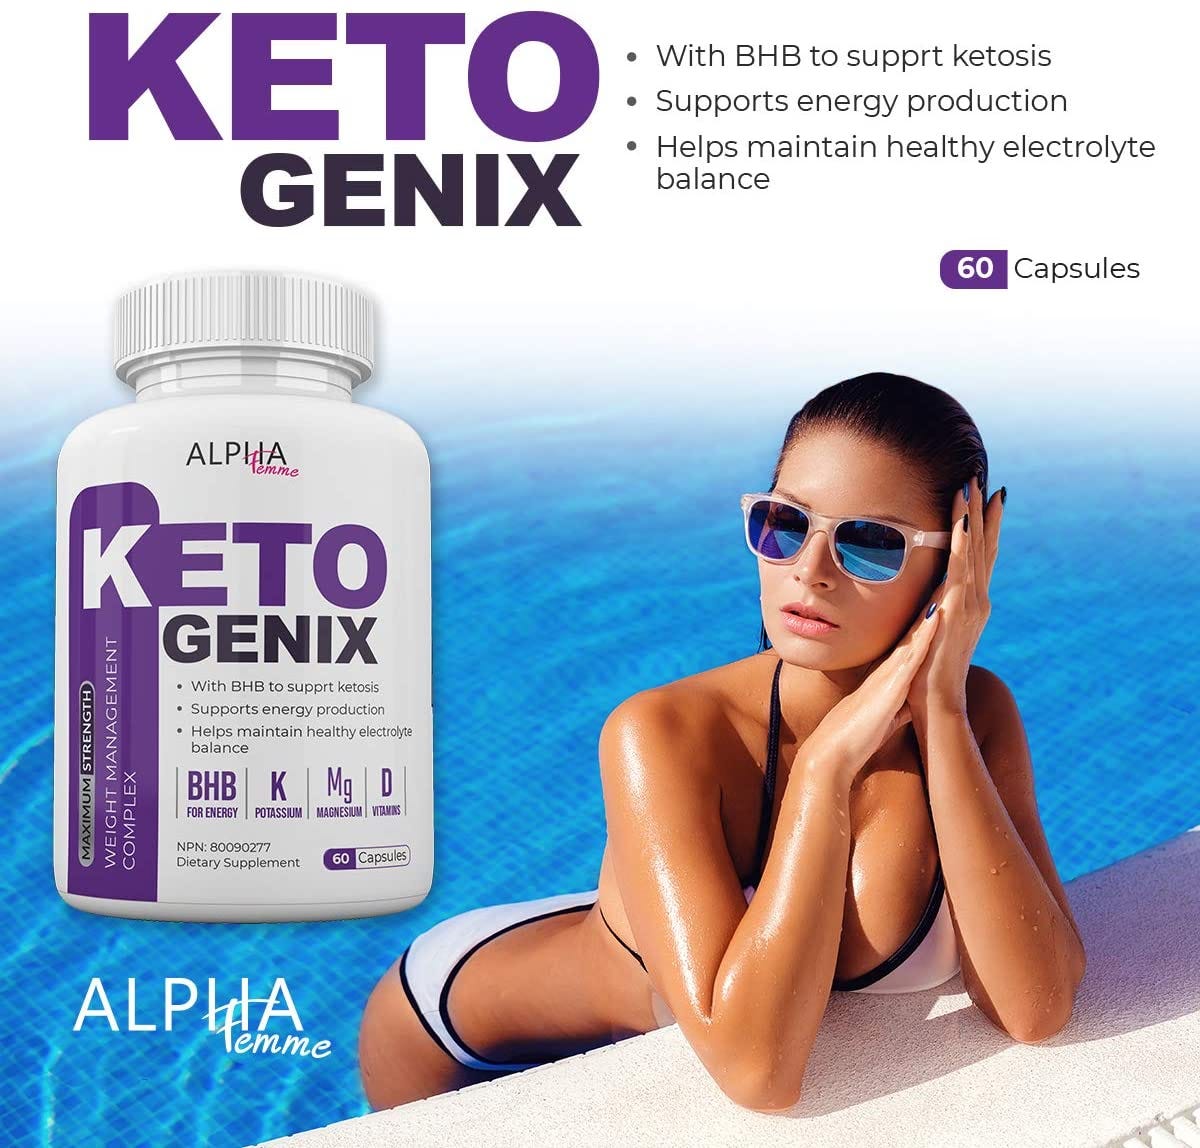 Alpha Femme Keto GENIX — Advanced Weight Loss Formula | by Greenape | Feb,  2021 | Medium